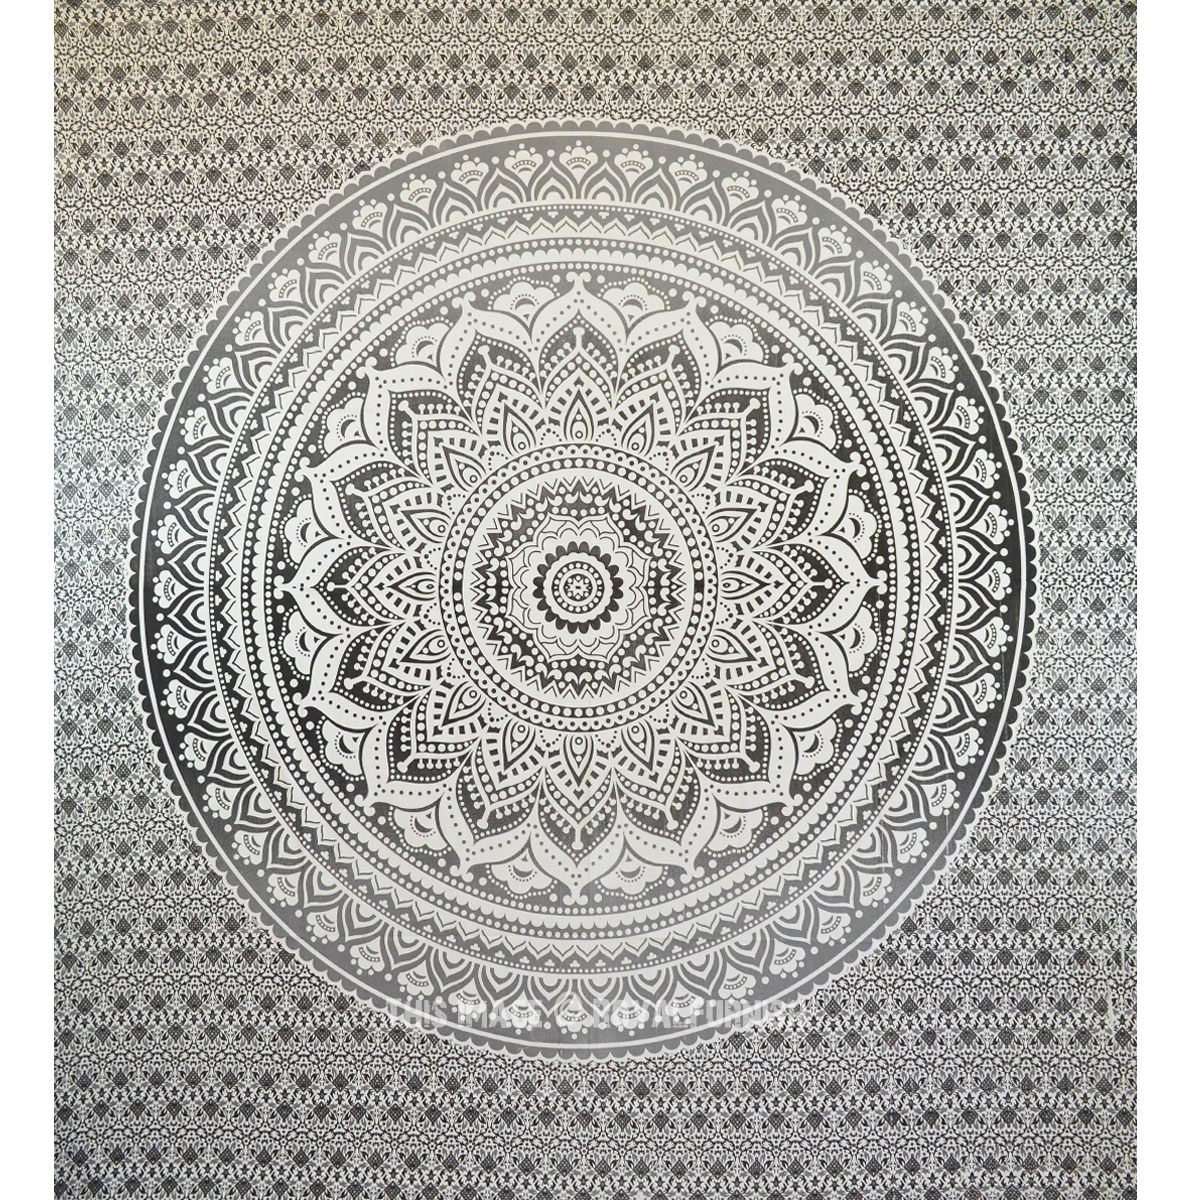 230x180cm200x150cm150x130cm-India-Mandala-Tapestry-Wall-Hanging-Decor-Wall-Cloth-Tapestries-Sandy-Be-1696997-2